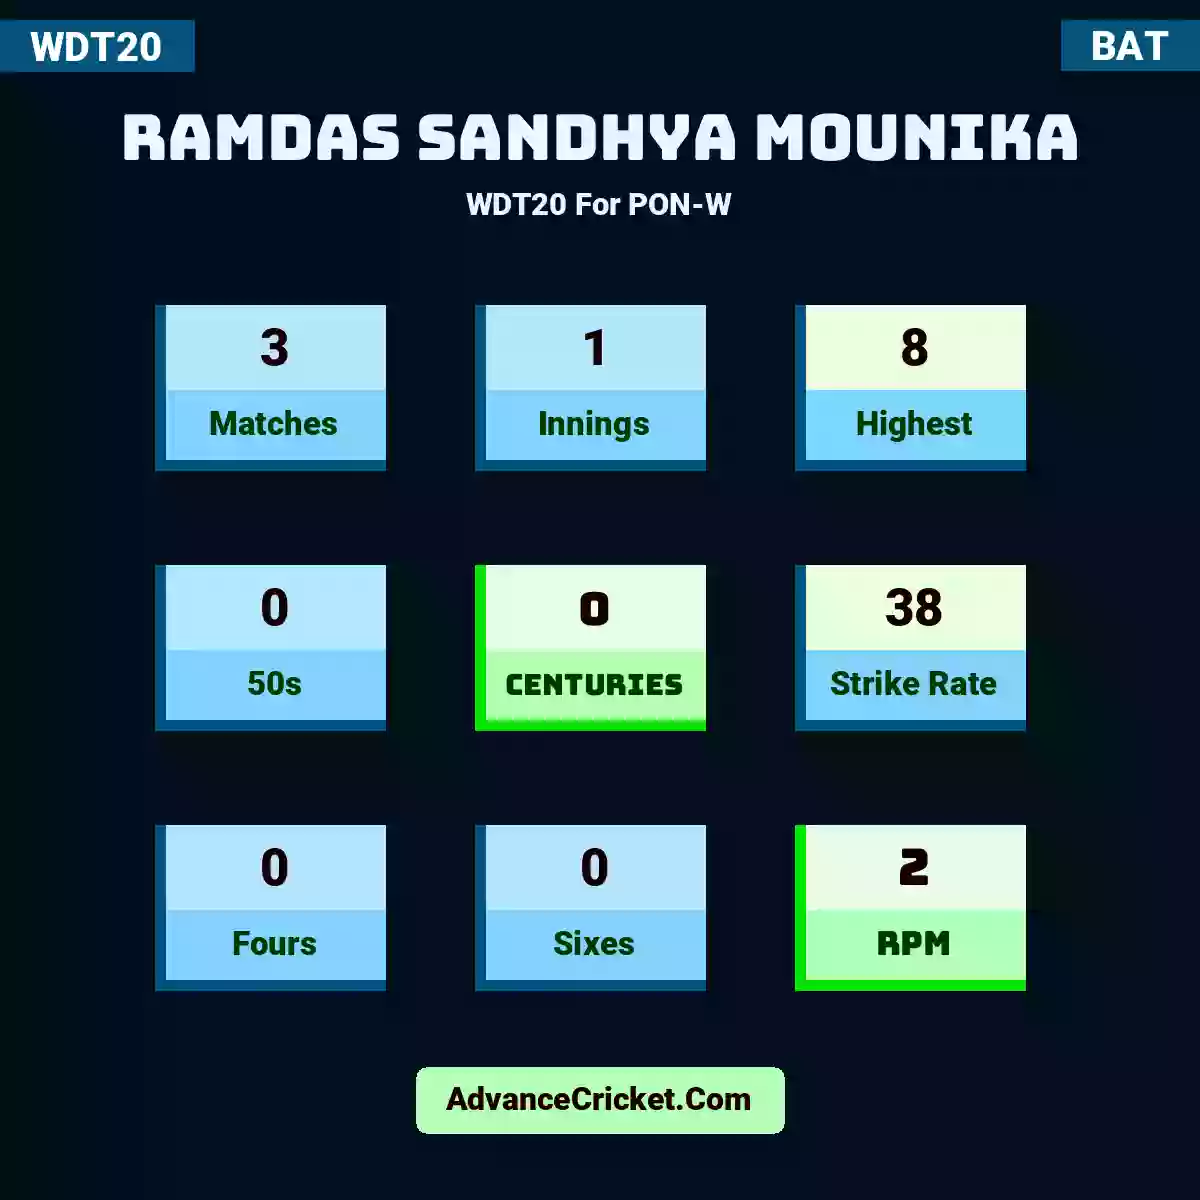 Ramdas Sandhya Mounika WDT20  For PON-W, Ramdas Sandhya Mounika played 3 matches, scored 8 runs as highest, 0 half-centuries, and 0 centuries, with a strike rate of 38. R.Sandhya.Mounika hit 0 fours and 0 sixes, with an RPM of 2.